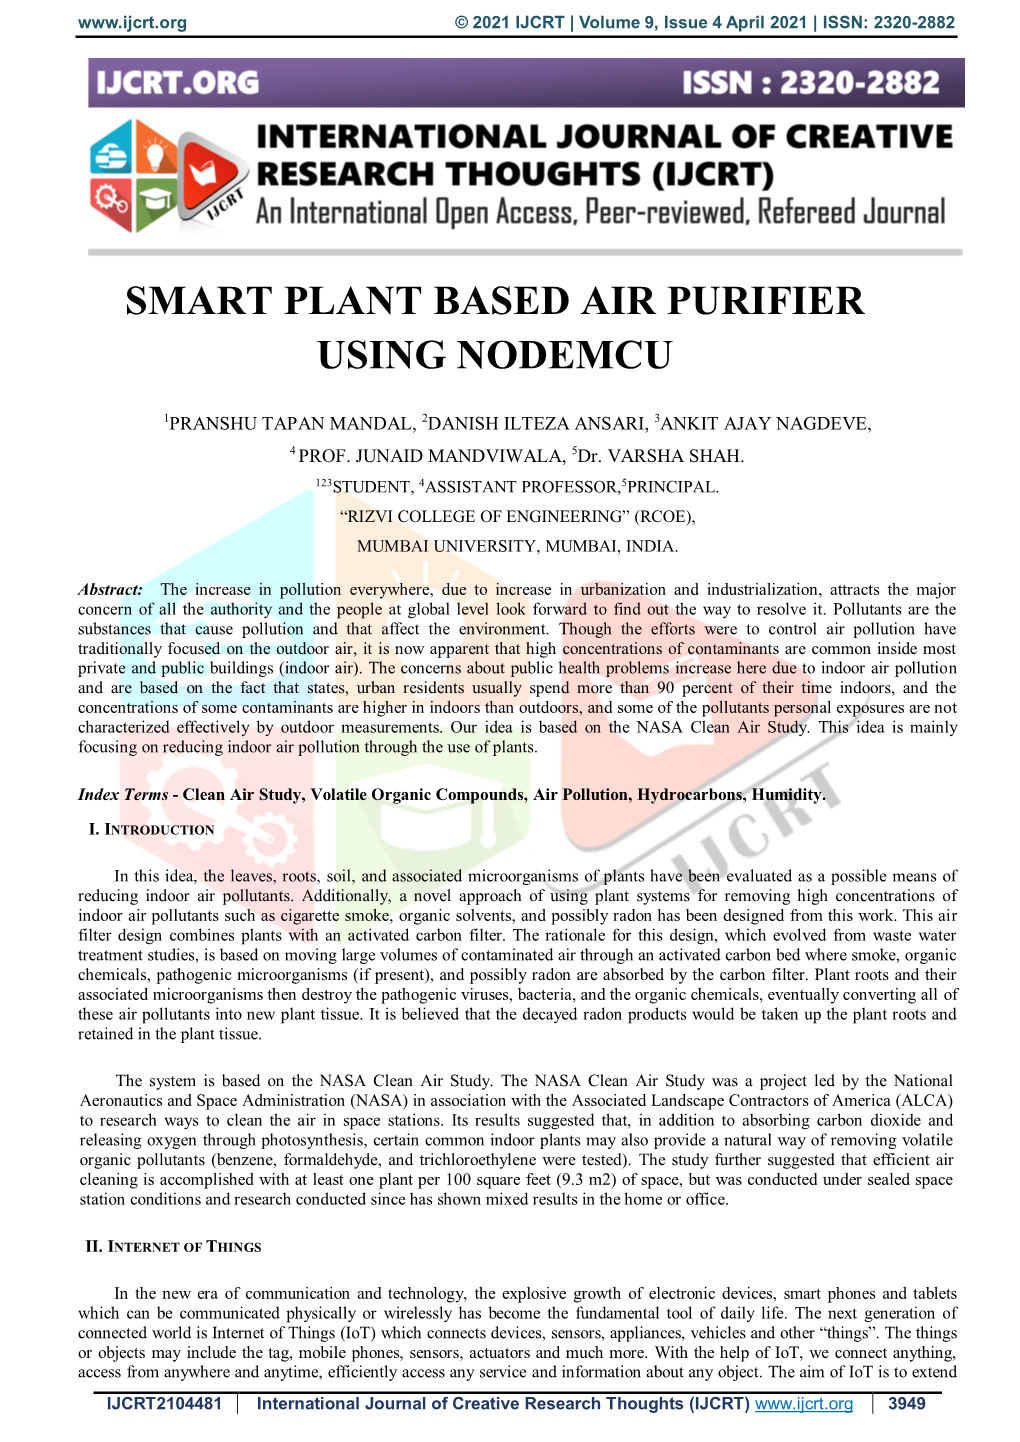 Smart Plant Based Air Purifier Using Nodemcu